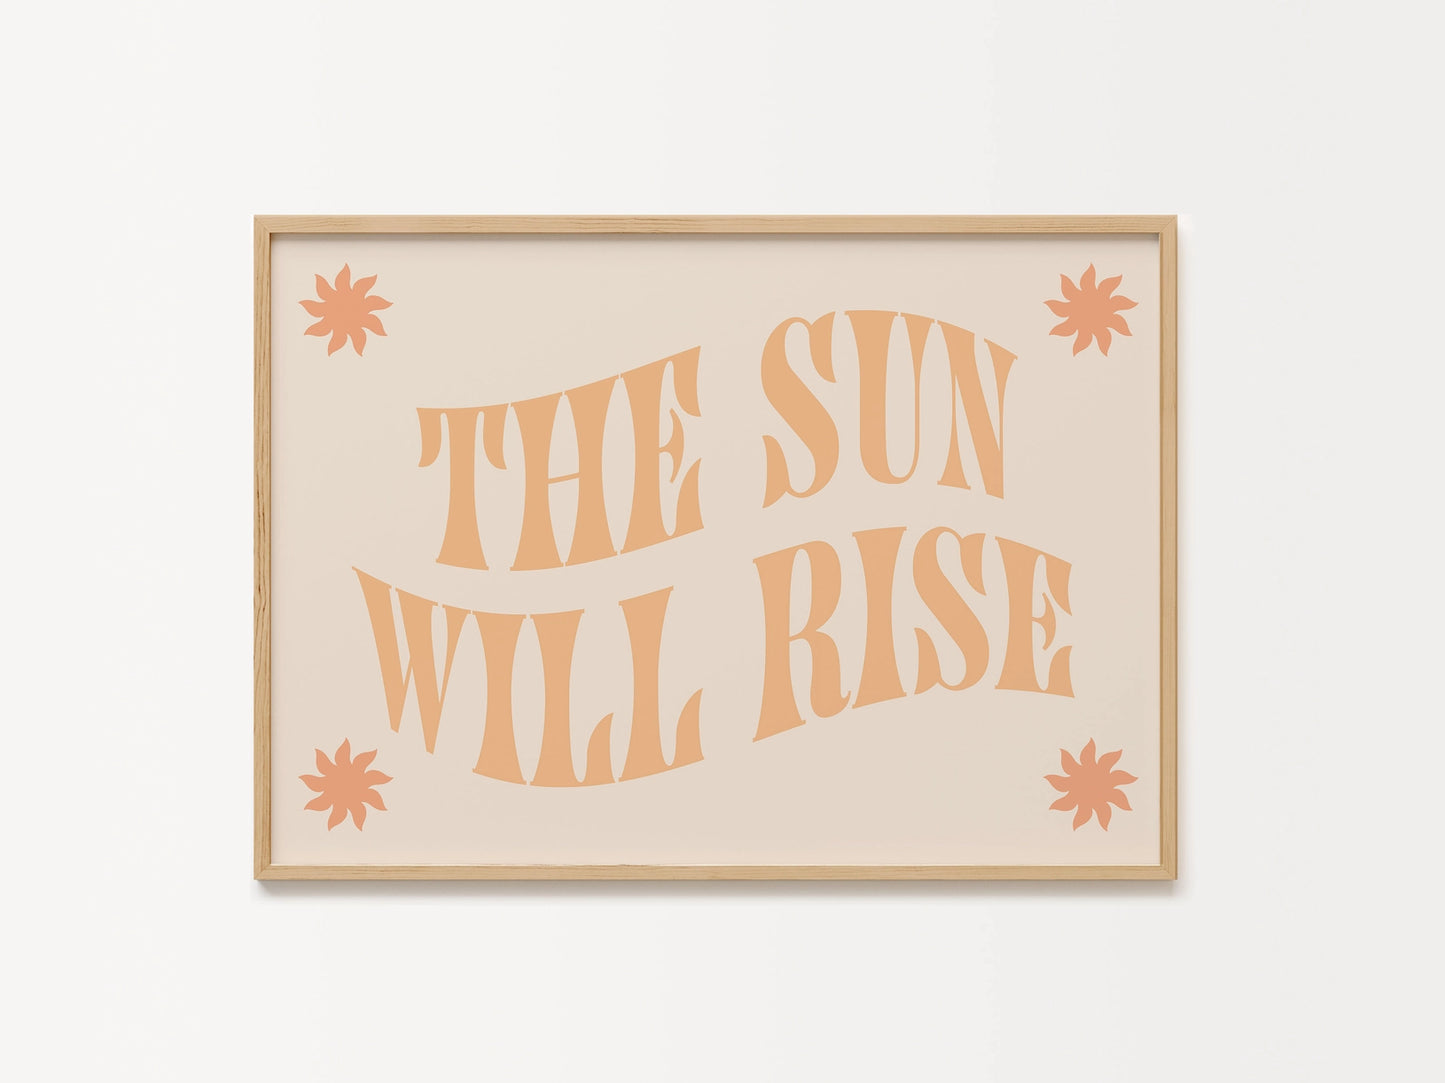 The Sun Will Rise A4 Print